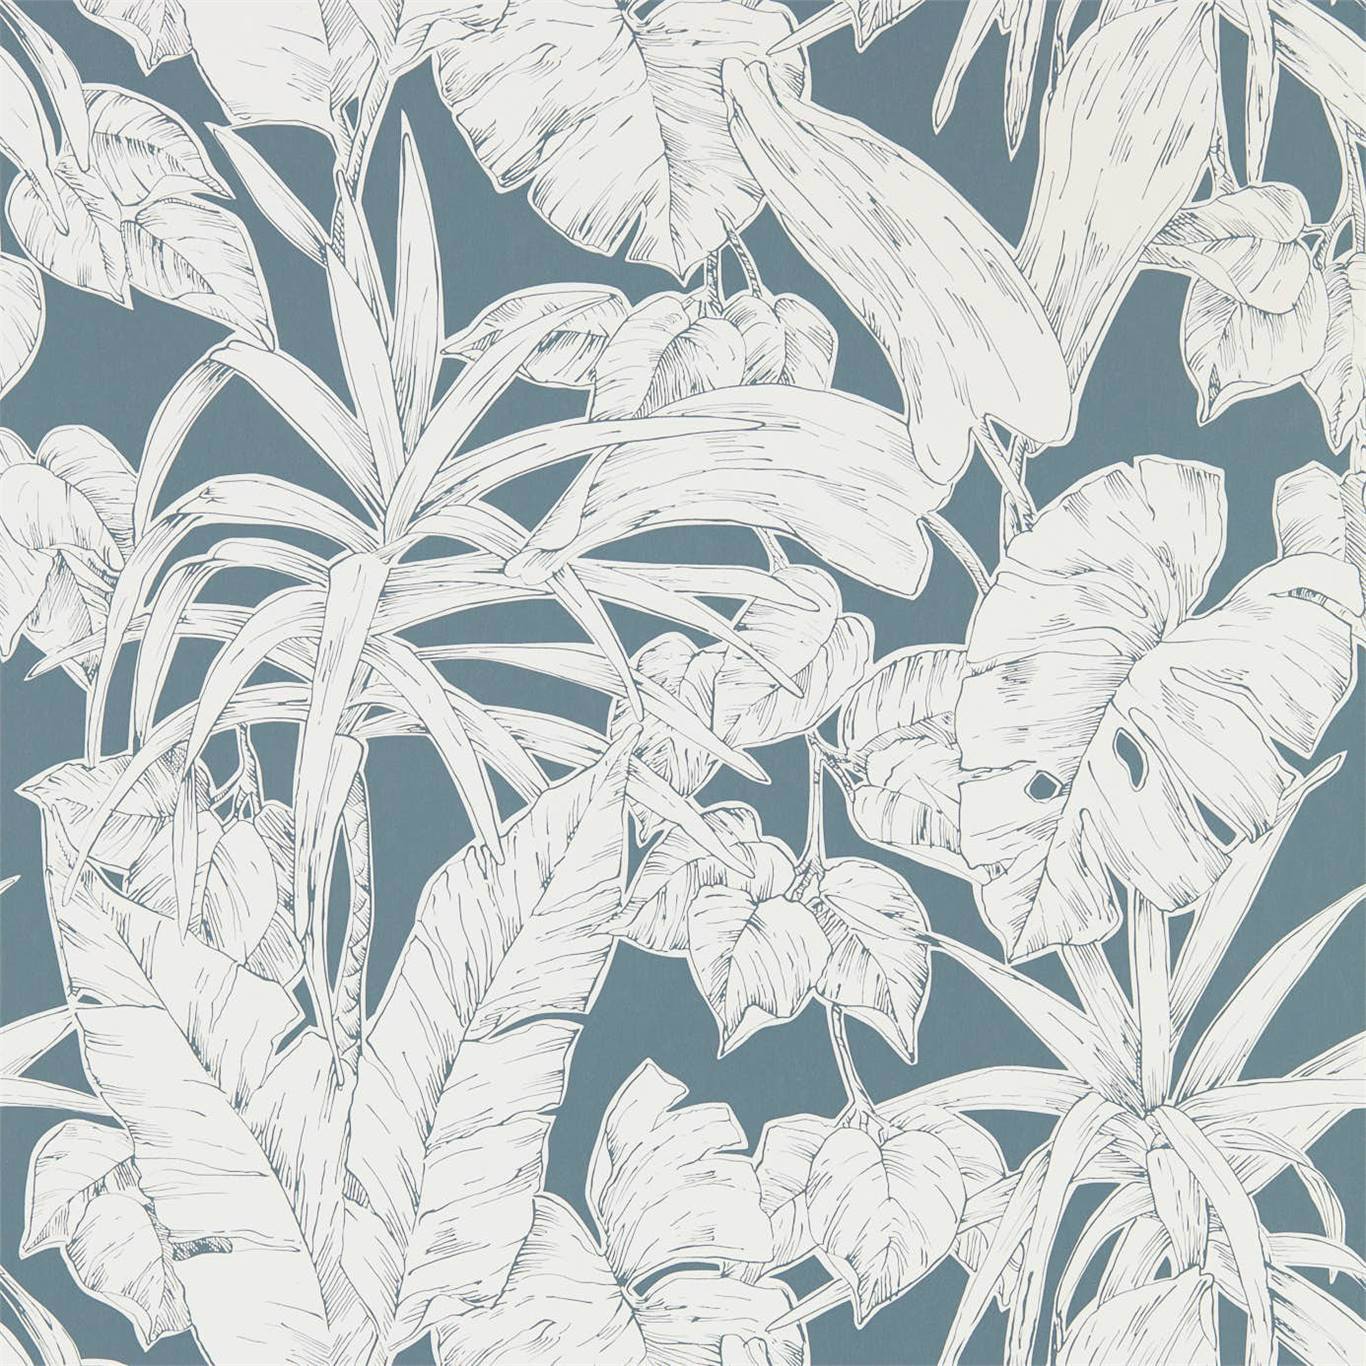 Parlour Palm Charcoal Wallpaper NZAW112023 by Scion